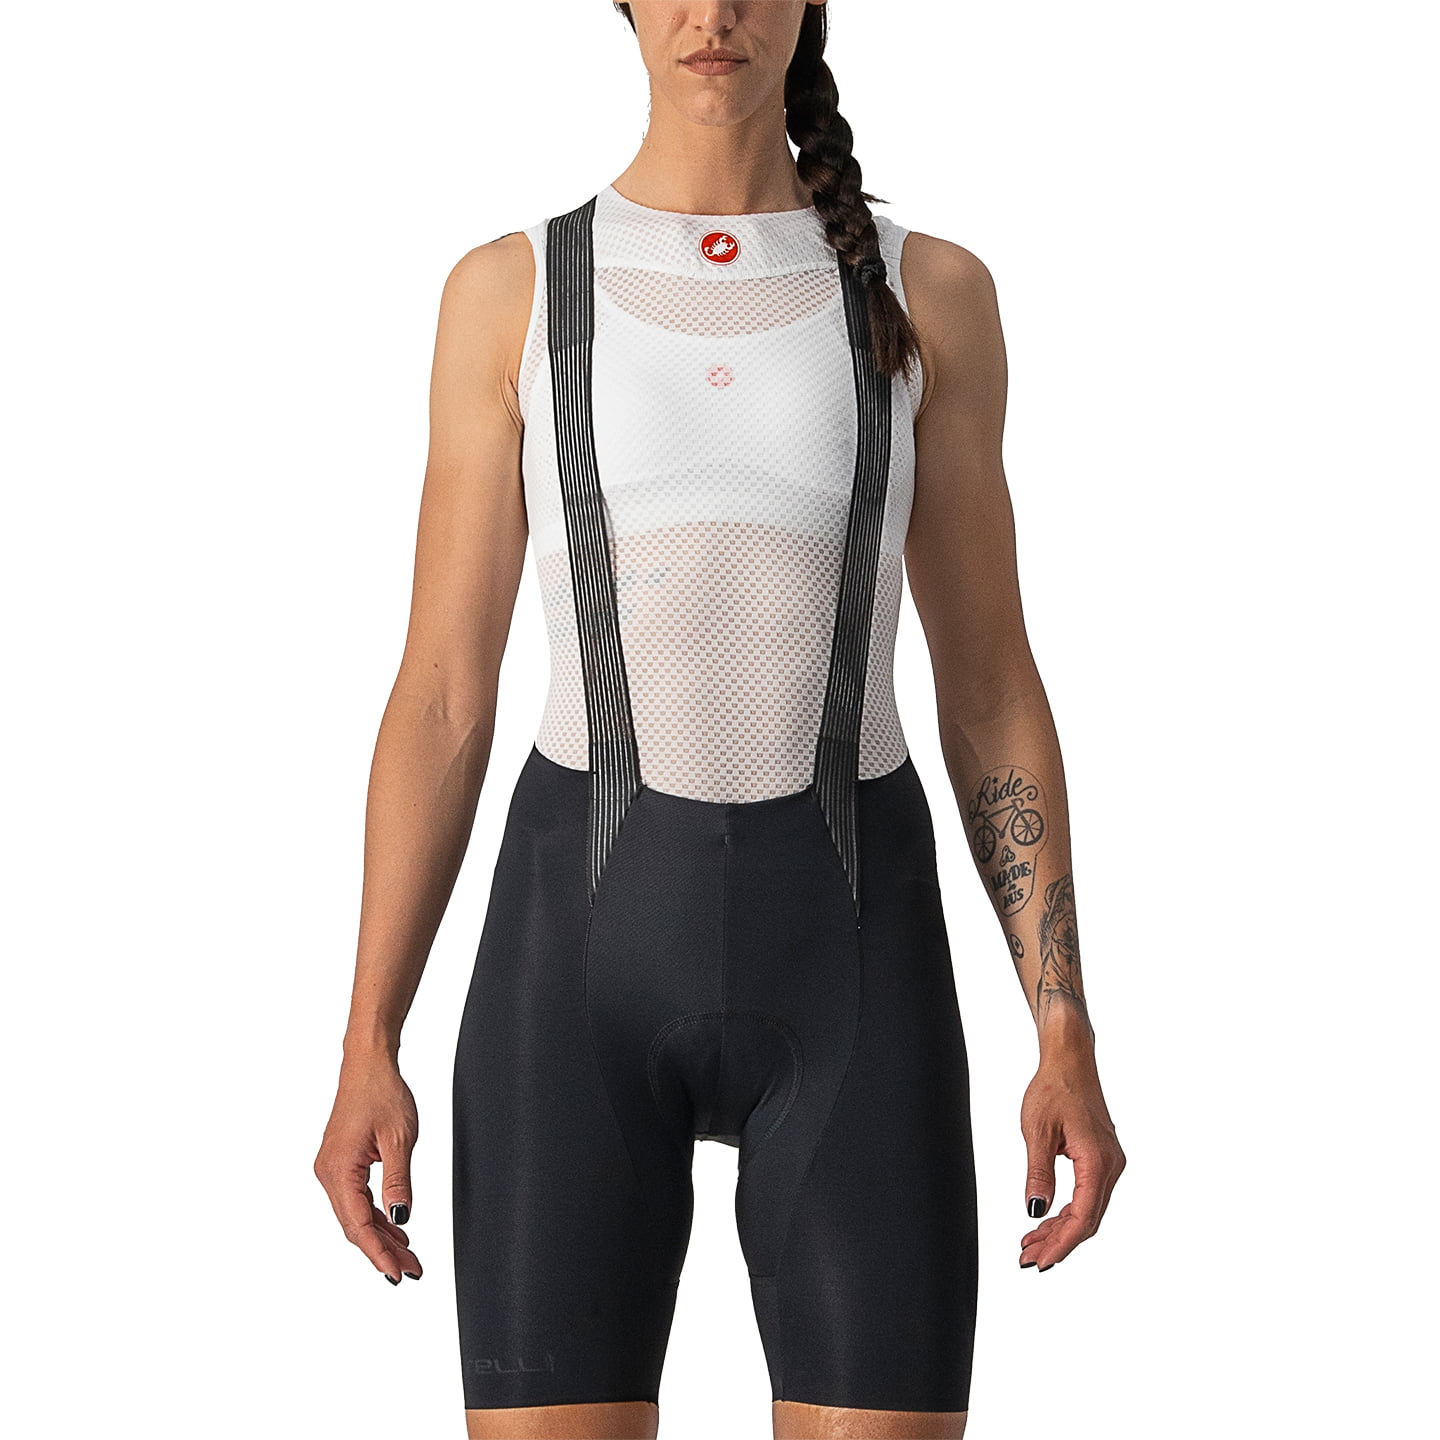 CASTELLI Free Aero RC Women’s Bib Shorts Women’s Bib Shorts, size L, Cycle shorts, Cycling clothing